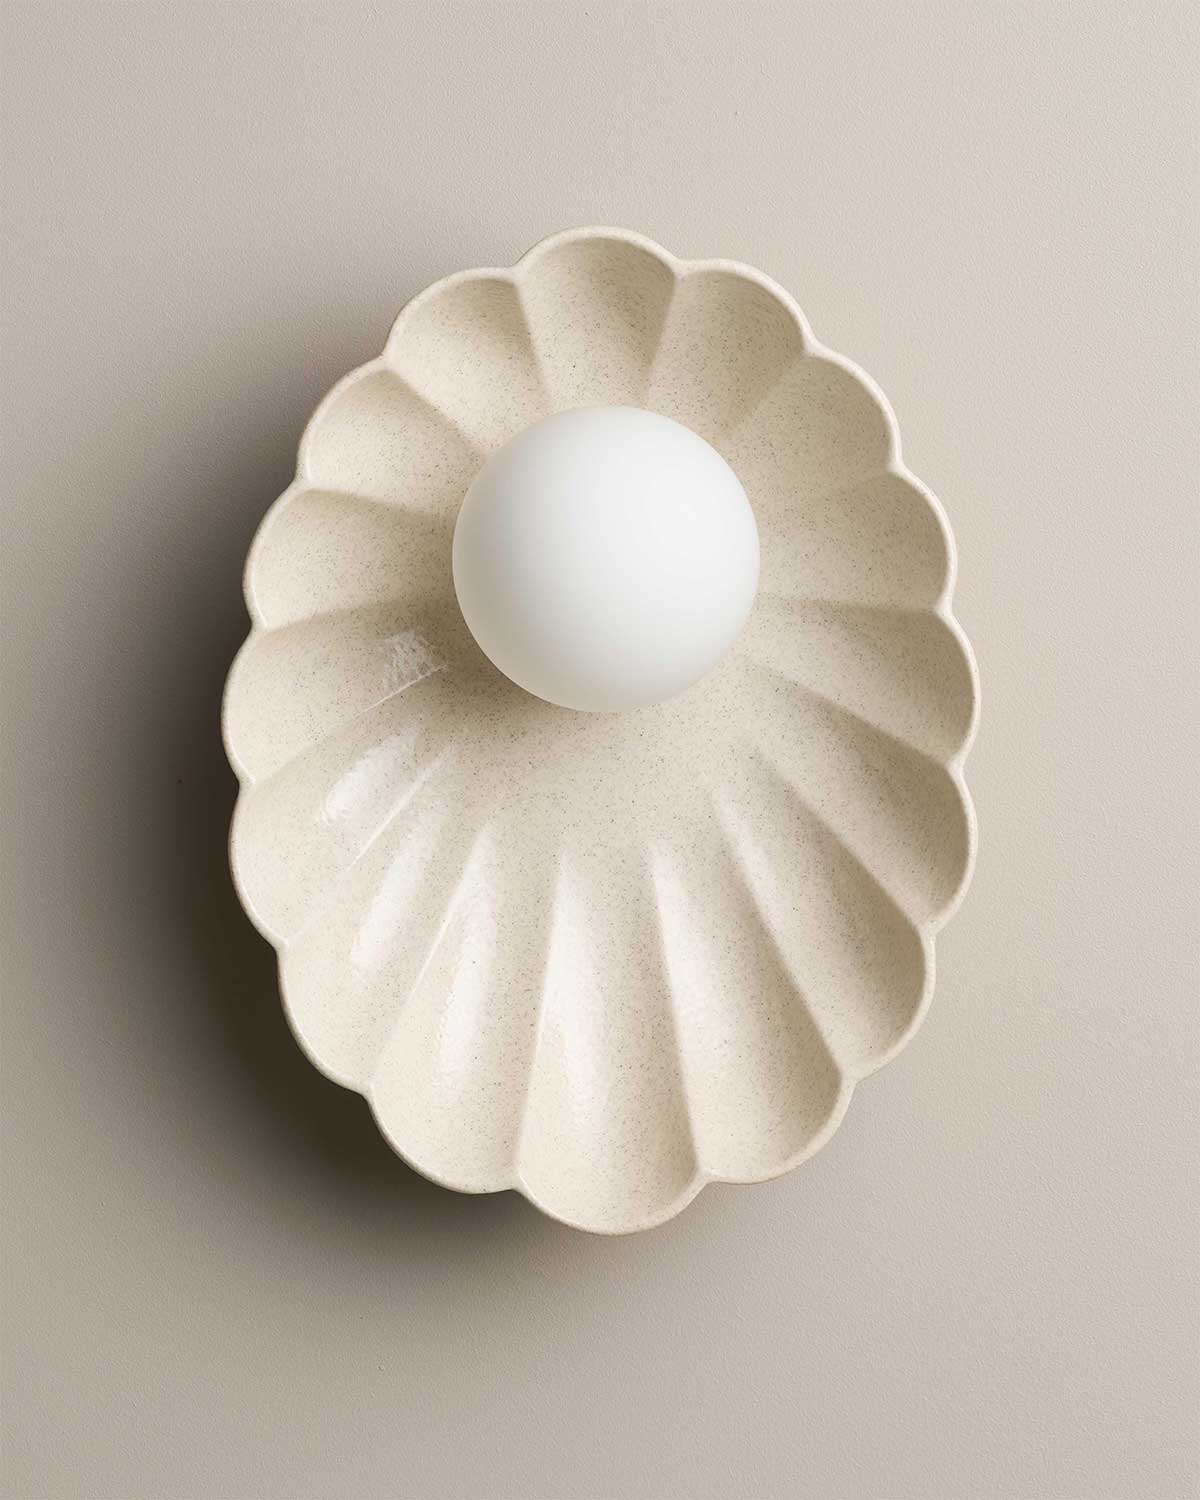 Ceramic Wall Oyster Sconce Light / Poppyseed